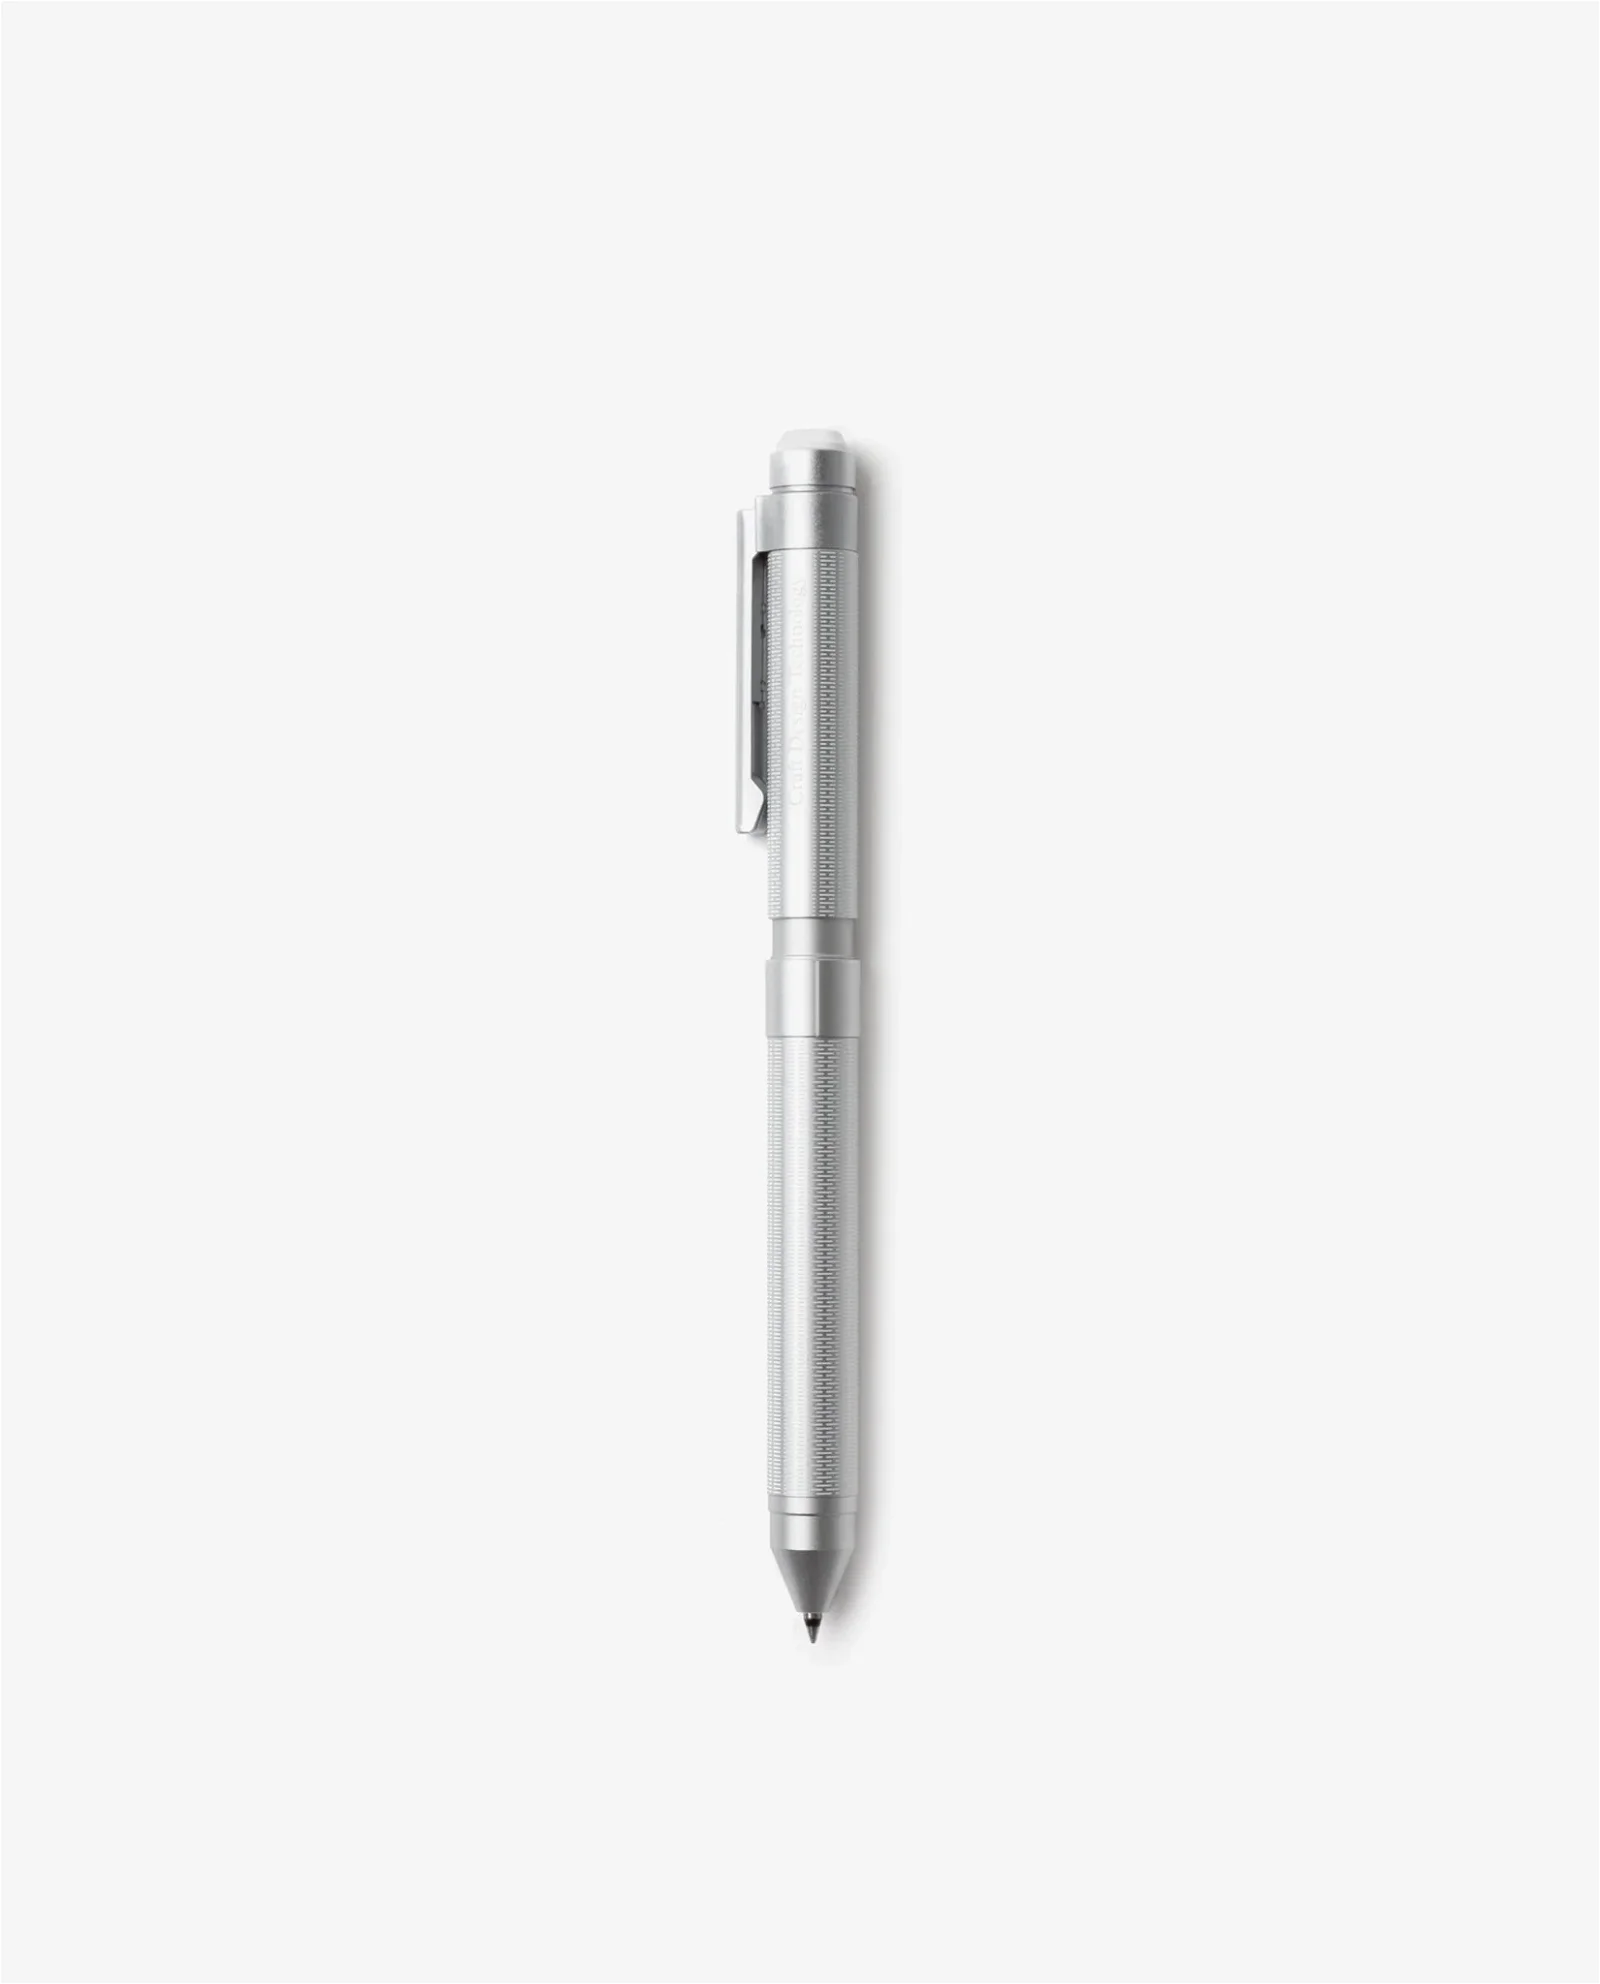 Image of Craft Design Technology Multifunctional Pen